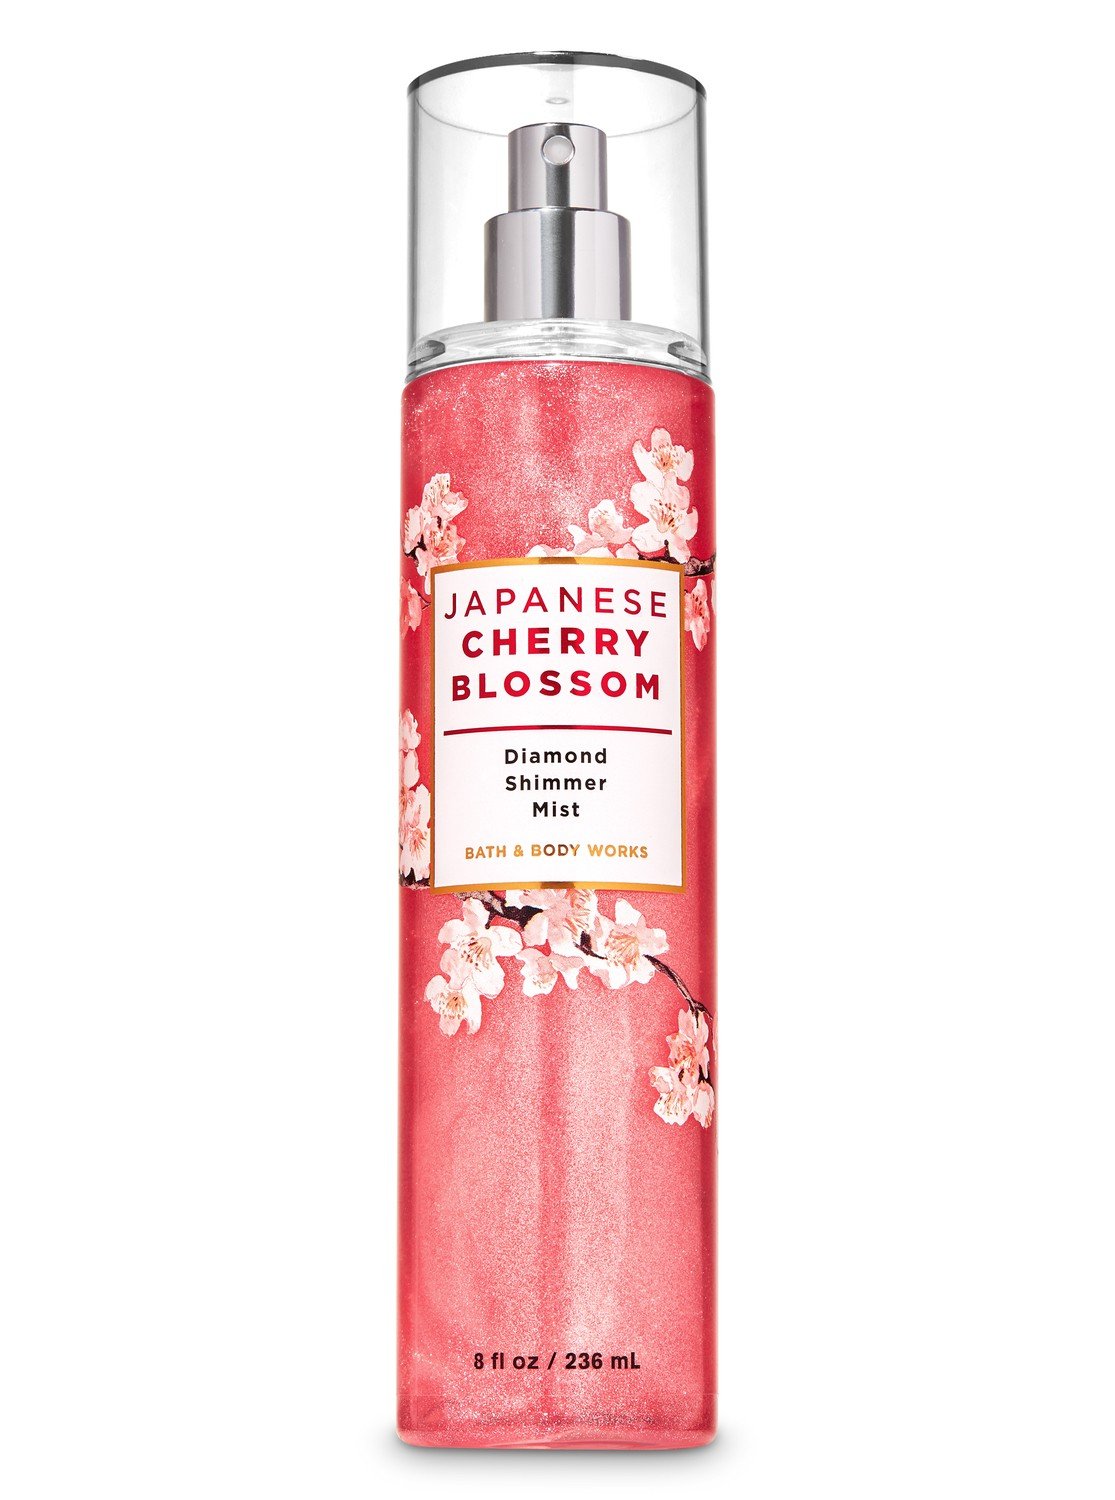 Japanese Cherry Blossom Body Spray And Mist Bath And Body Works Australia